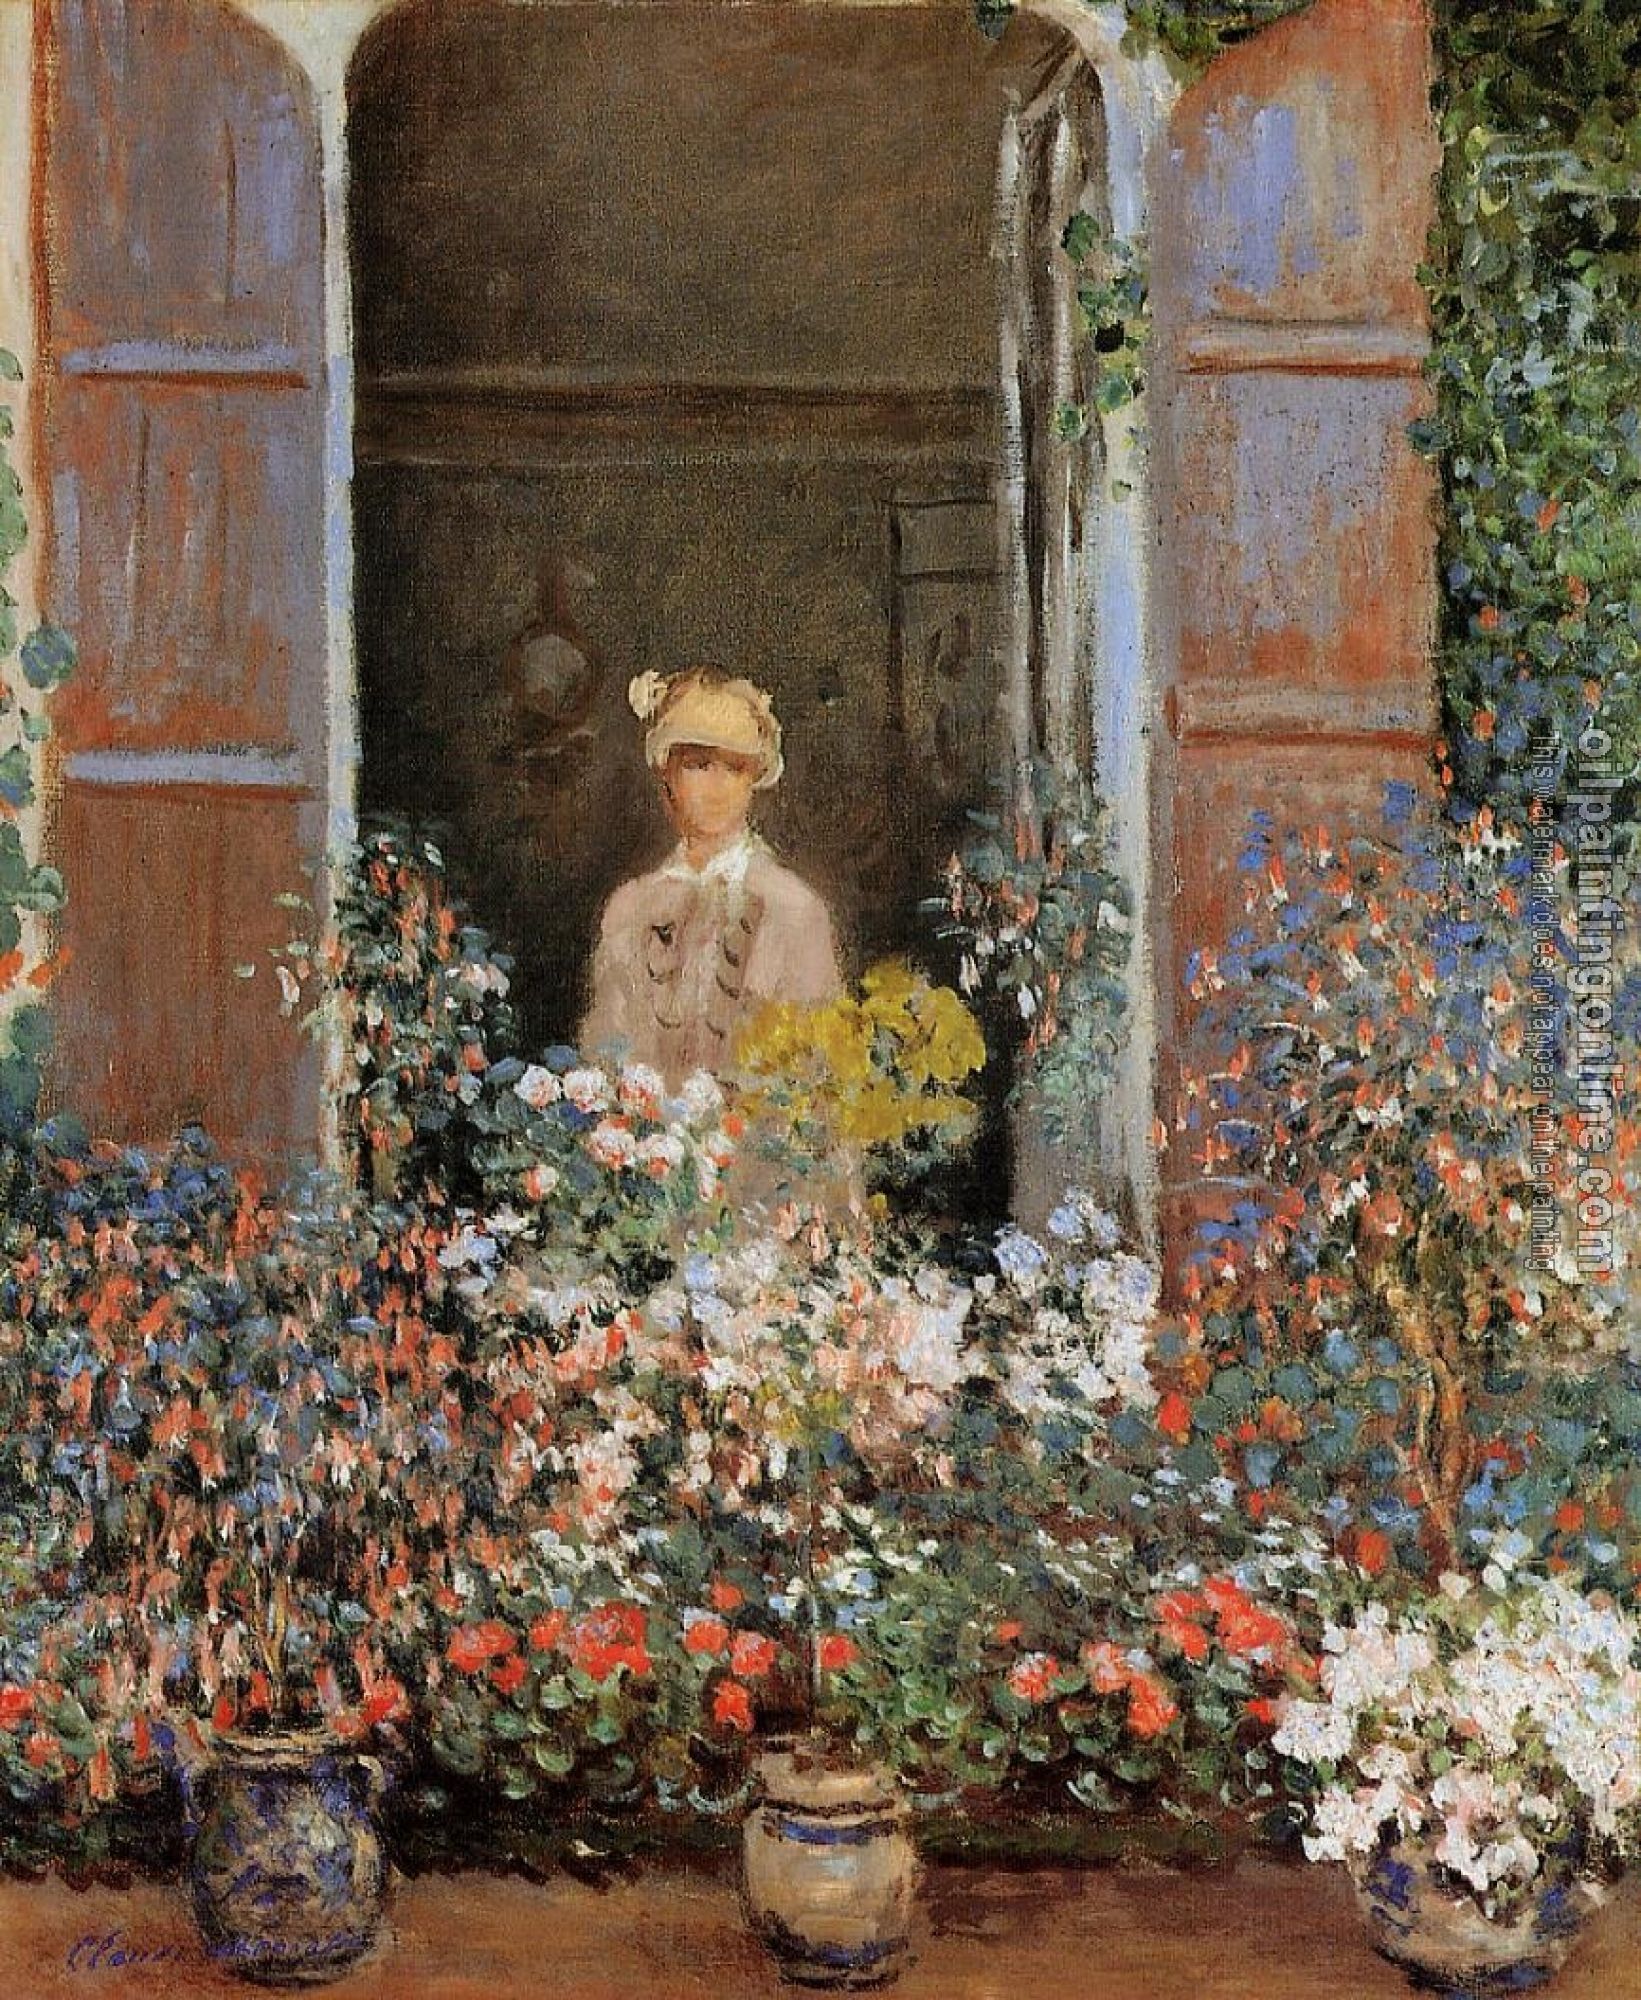 Monet, Claude Oscar - Camille Monet at the Window, Argentuil